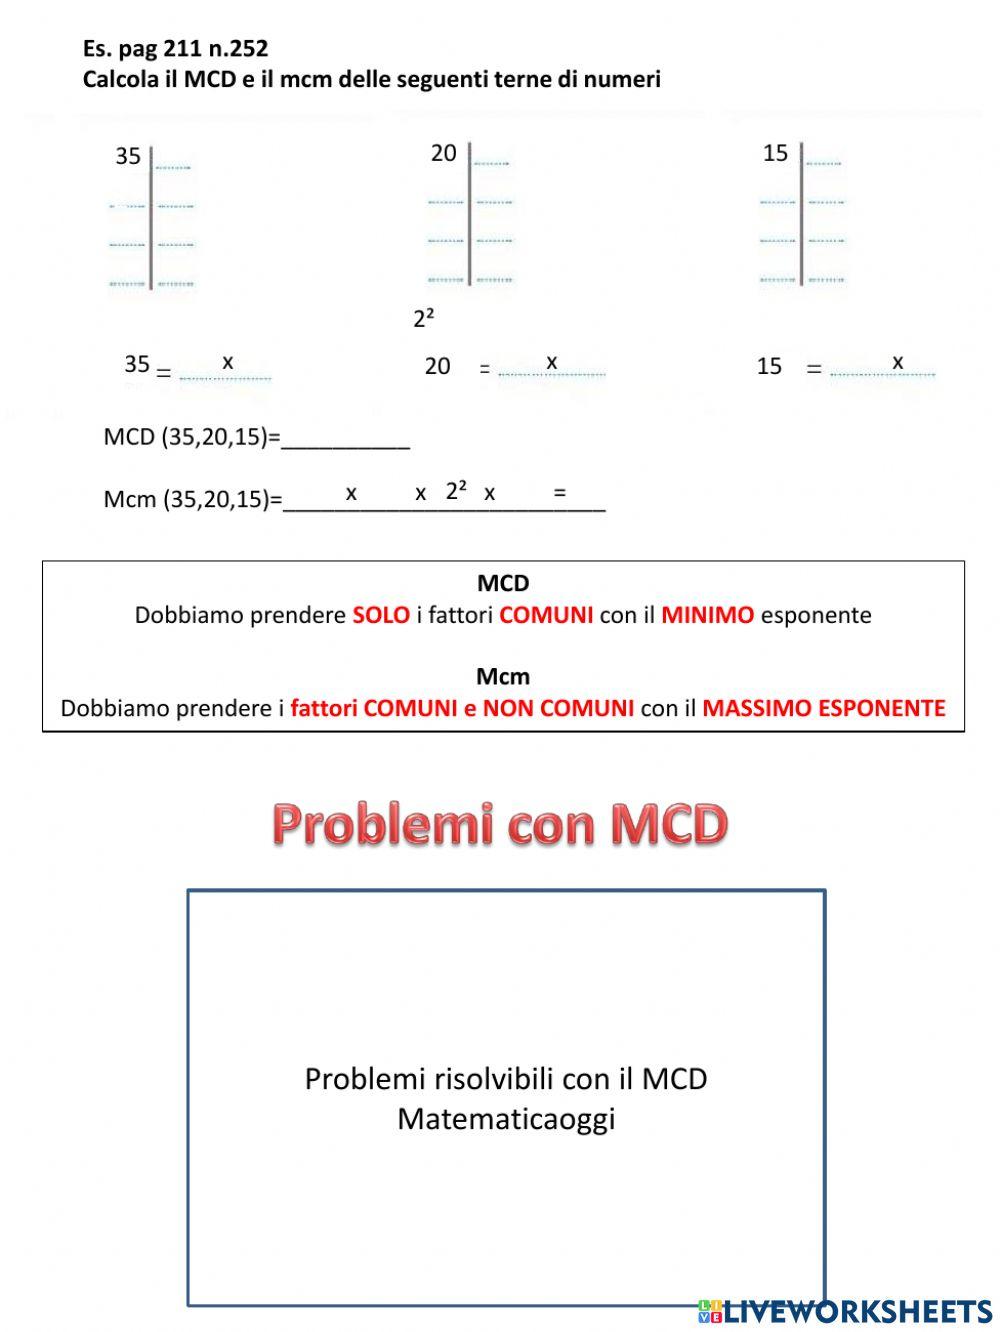 MCD mcm e problemi